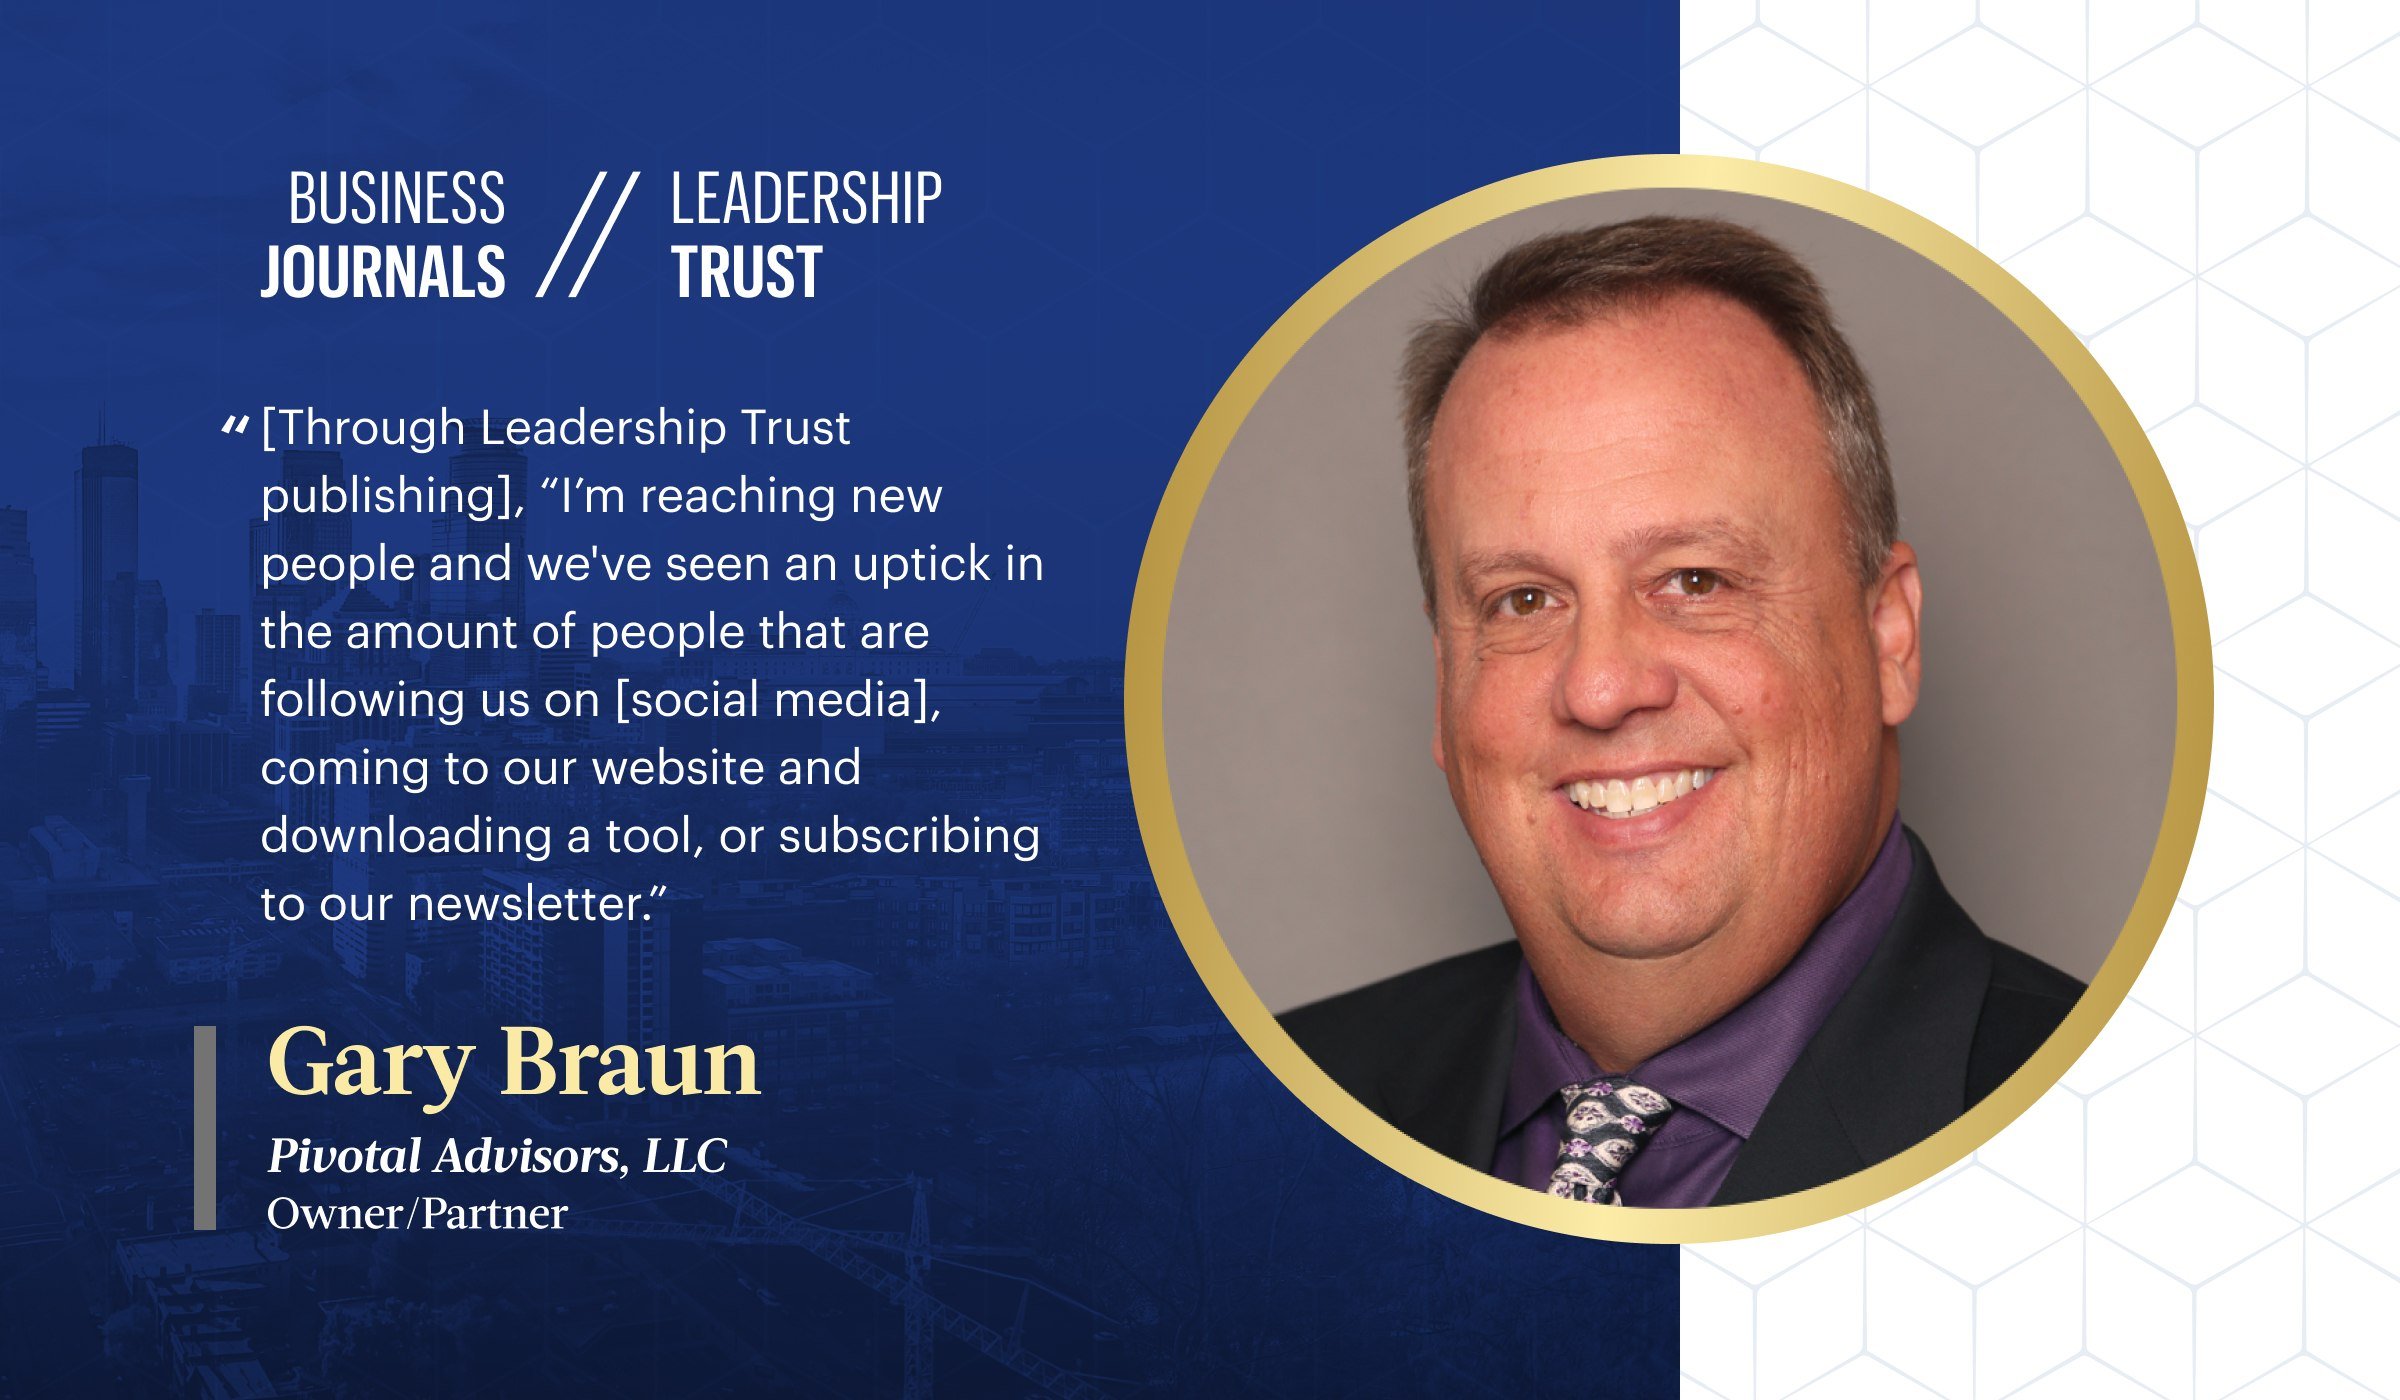 Minneapolis/St. Paul Business Journal Leadership Trust member Gary Braun